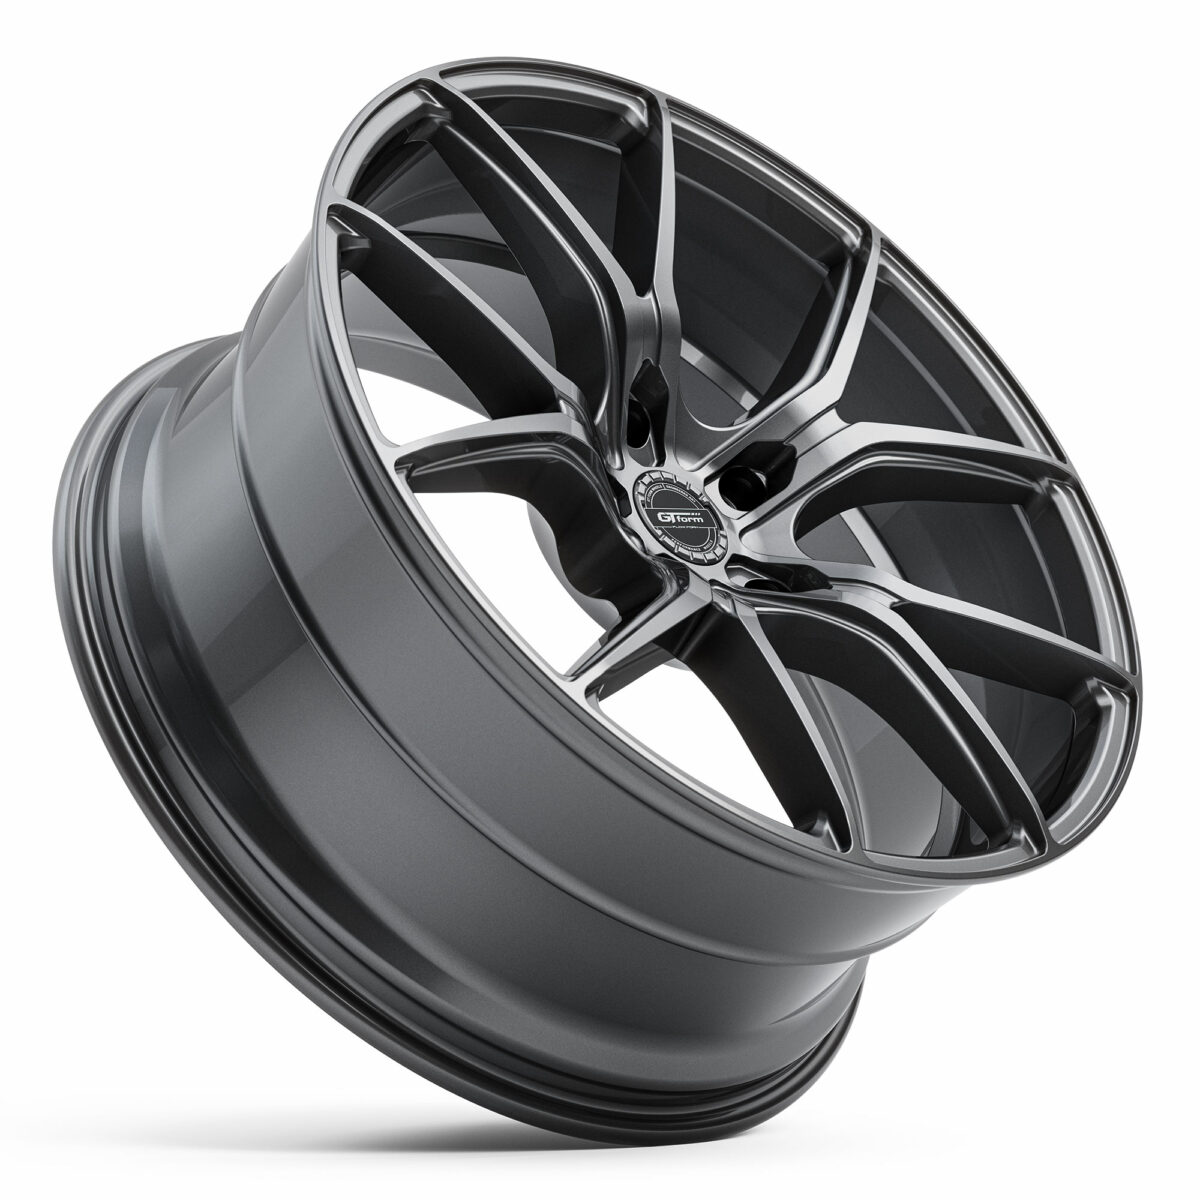 GT Form Venom Gloss Graphite Rims 22 inch Performance Wheels